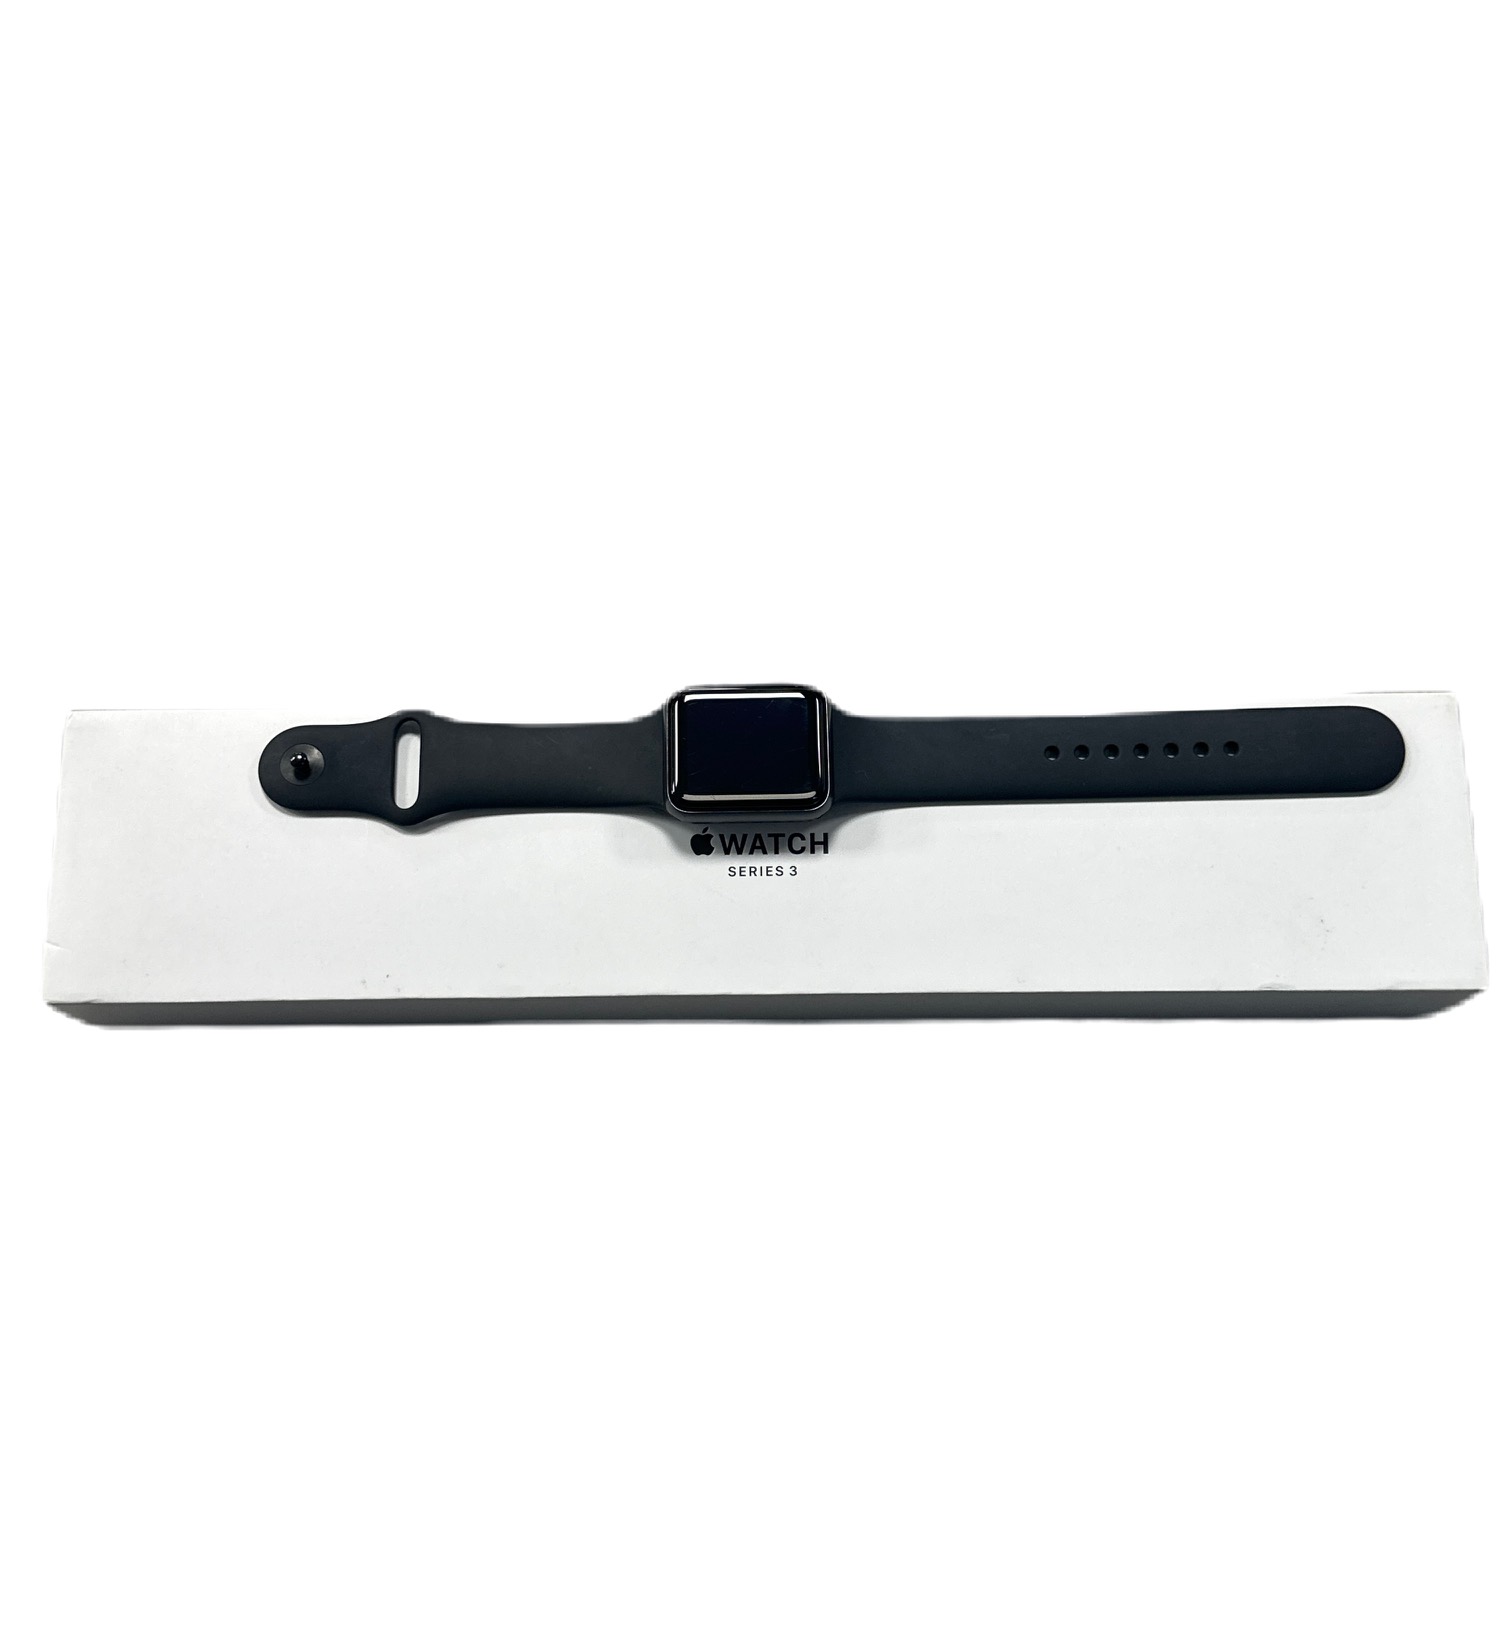 Apple Watch Series 3 38mm Space Grey - GPS - Black Straps - Box